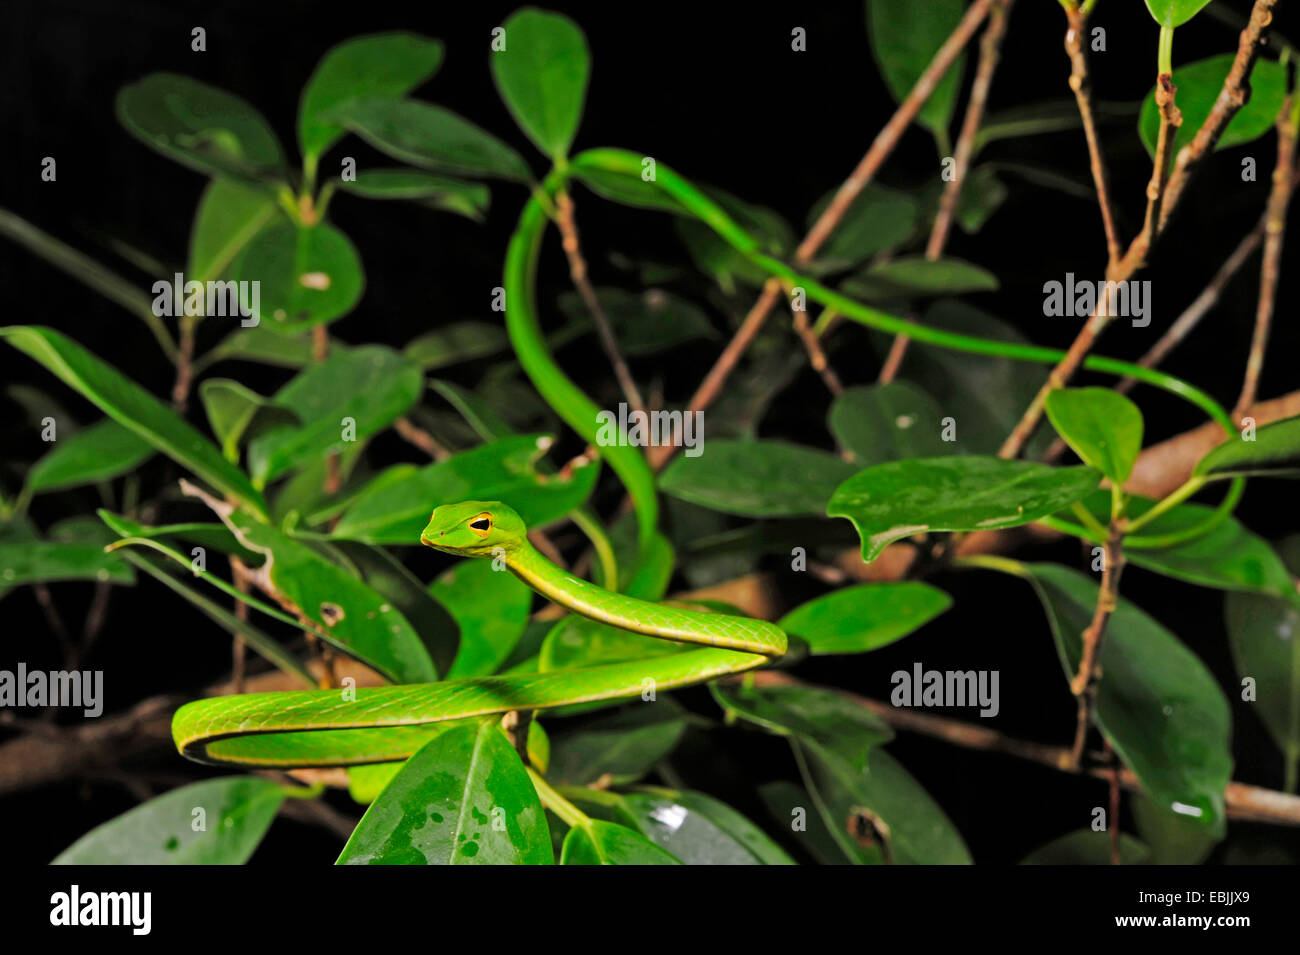 Longnose whipsnake, Green vine snake (Ahaetulla nasuta), creeping in a bush, Sri Lanka, Sinharaja Forest National Park Stock Photo